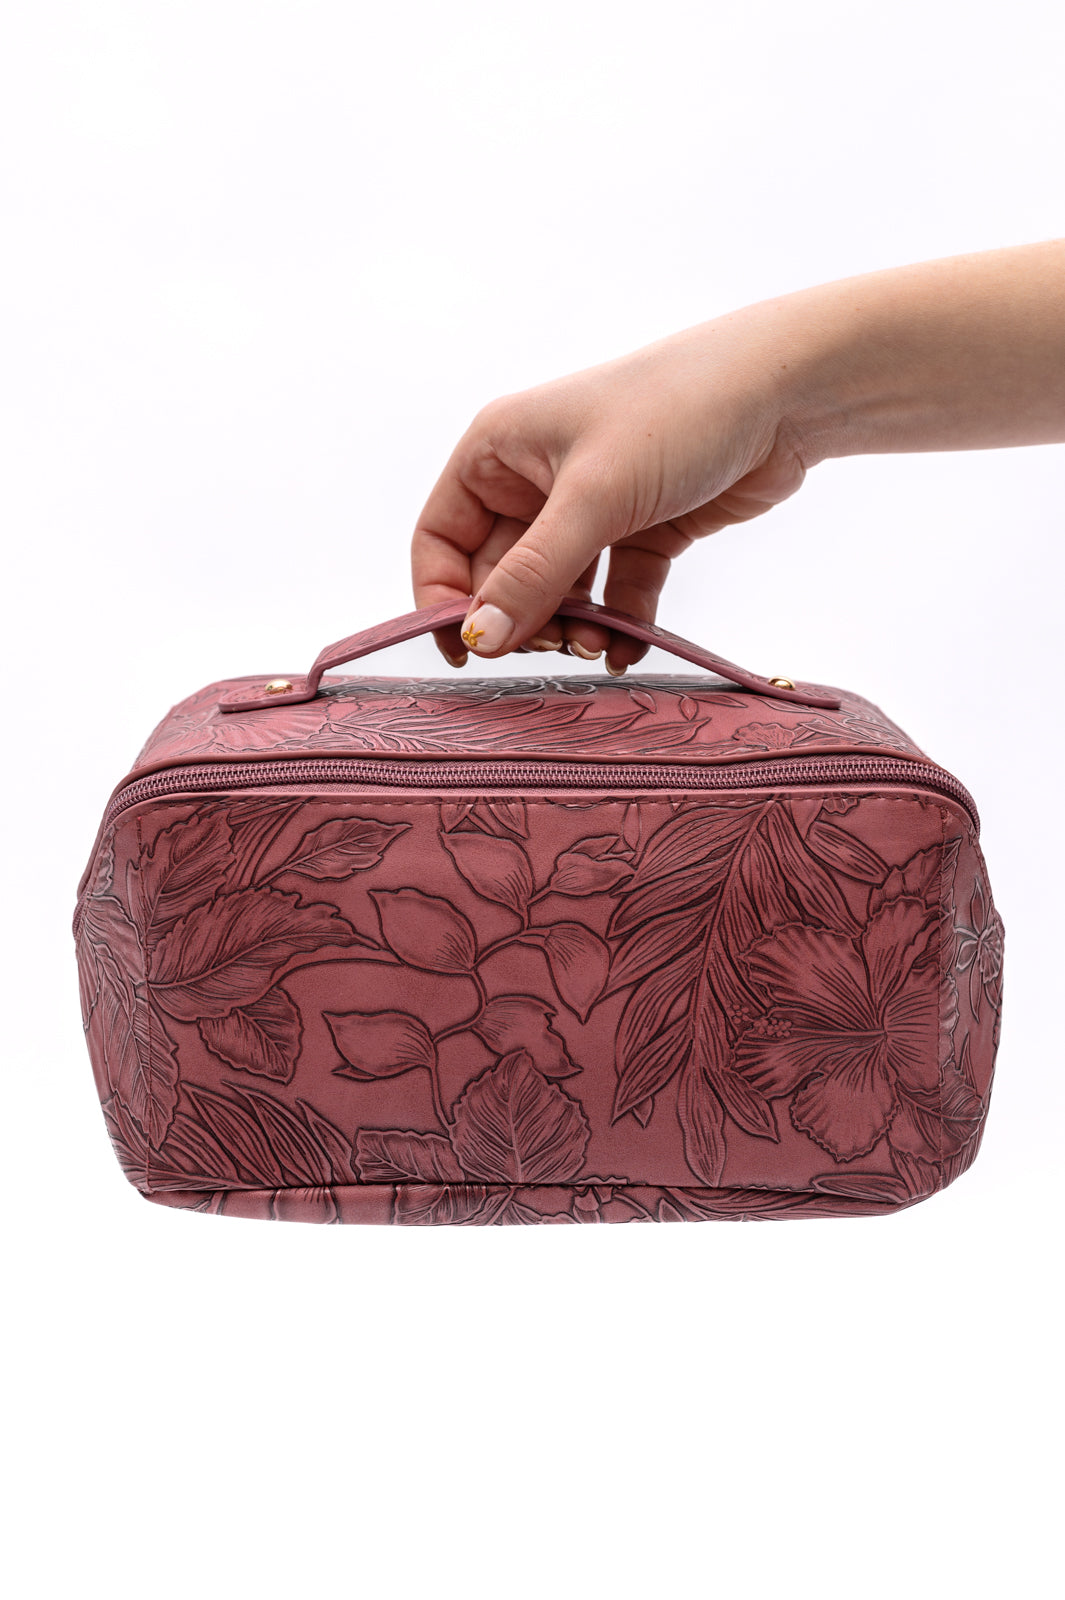 Floral Embossed Large Capacity Cosmetic Bag in Merlot